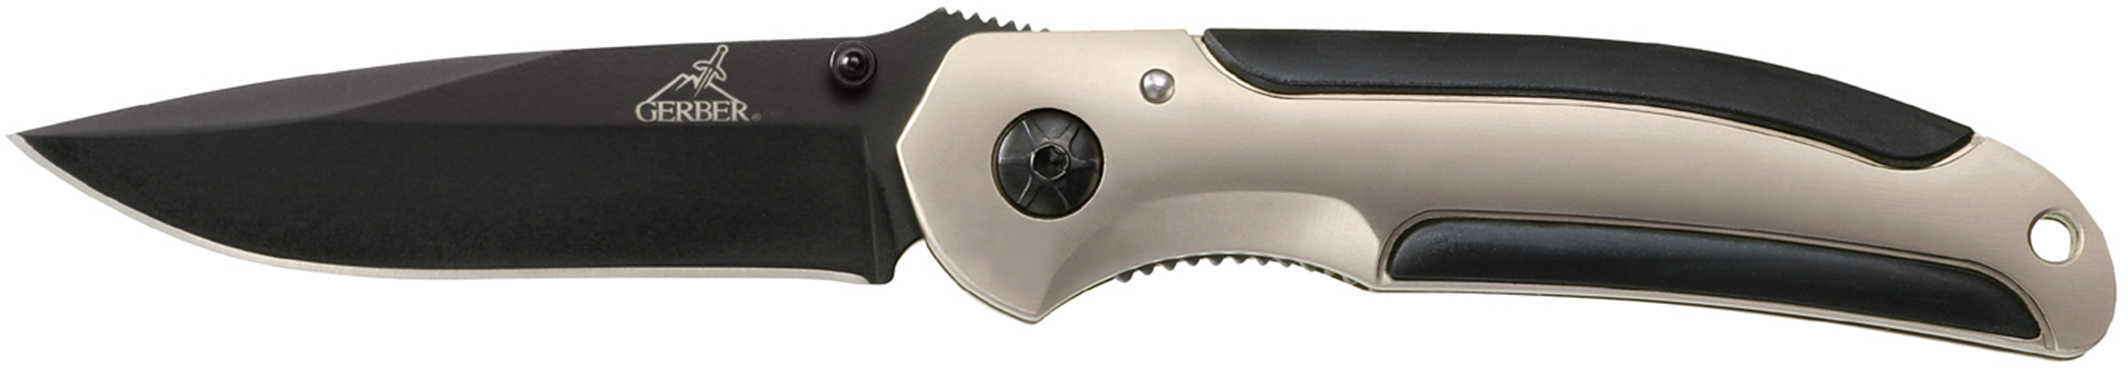 Gerber Folding Knife With Plain Edge Drop Point Blade Md: 05848